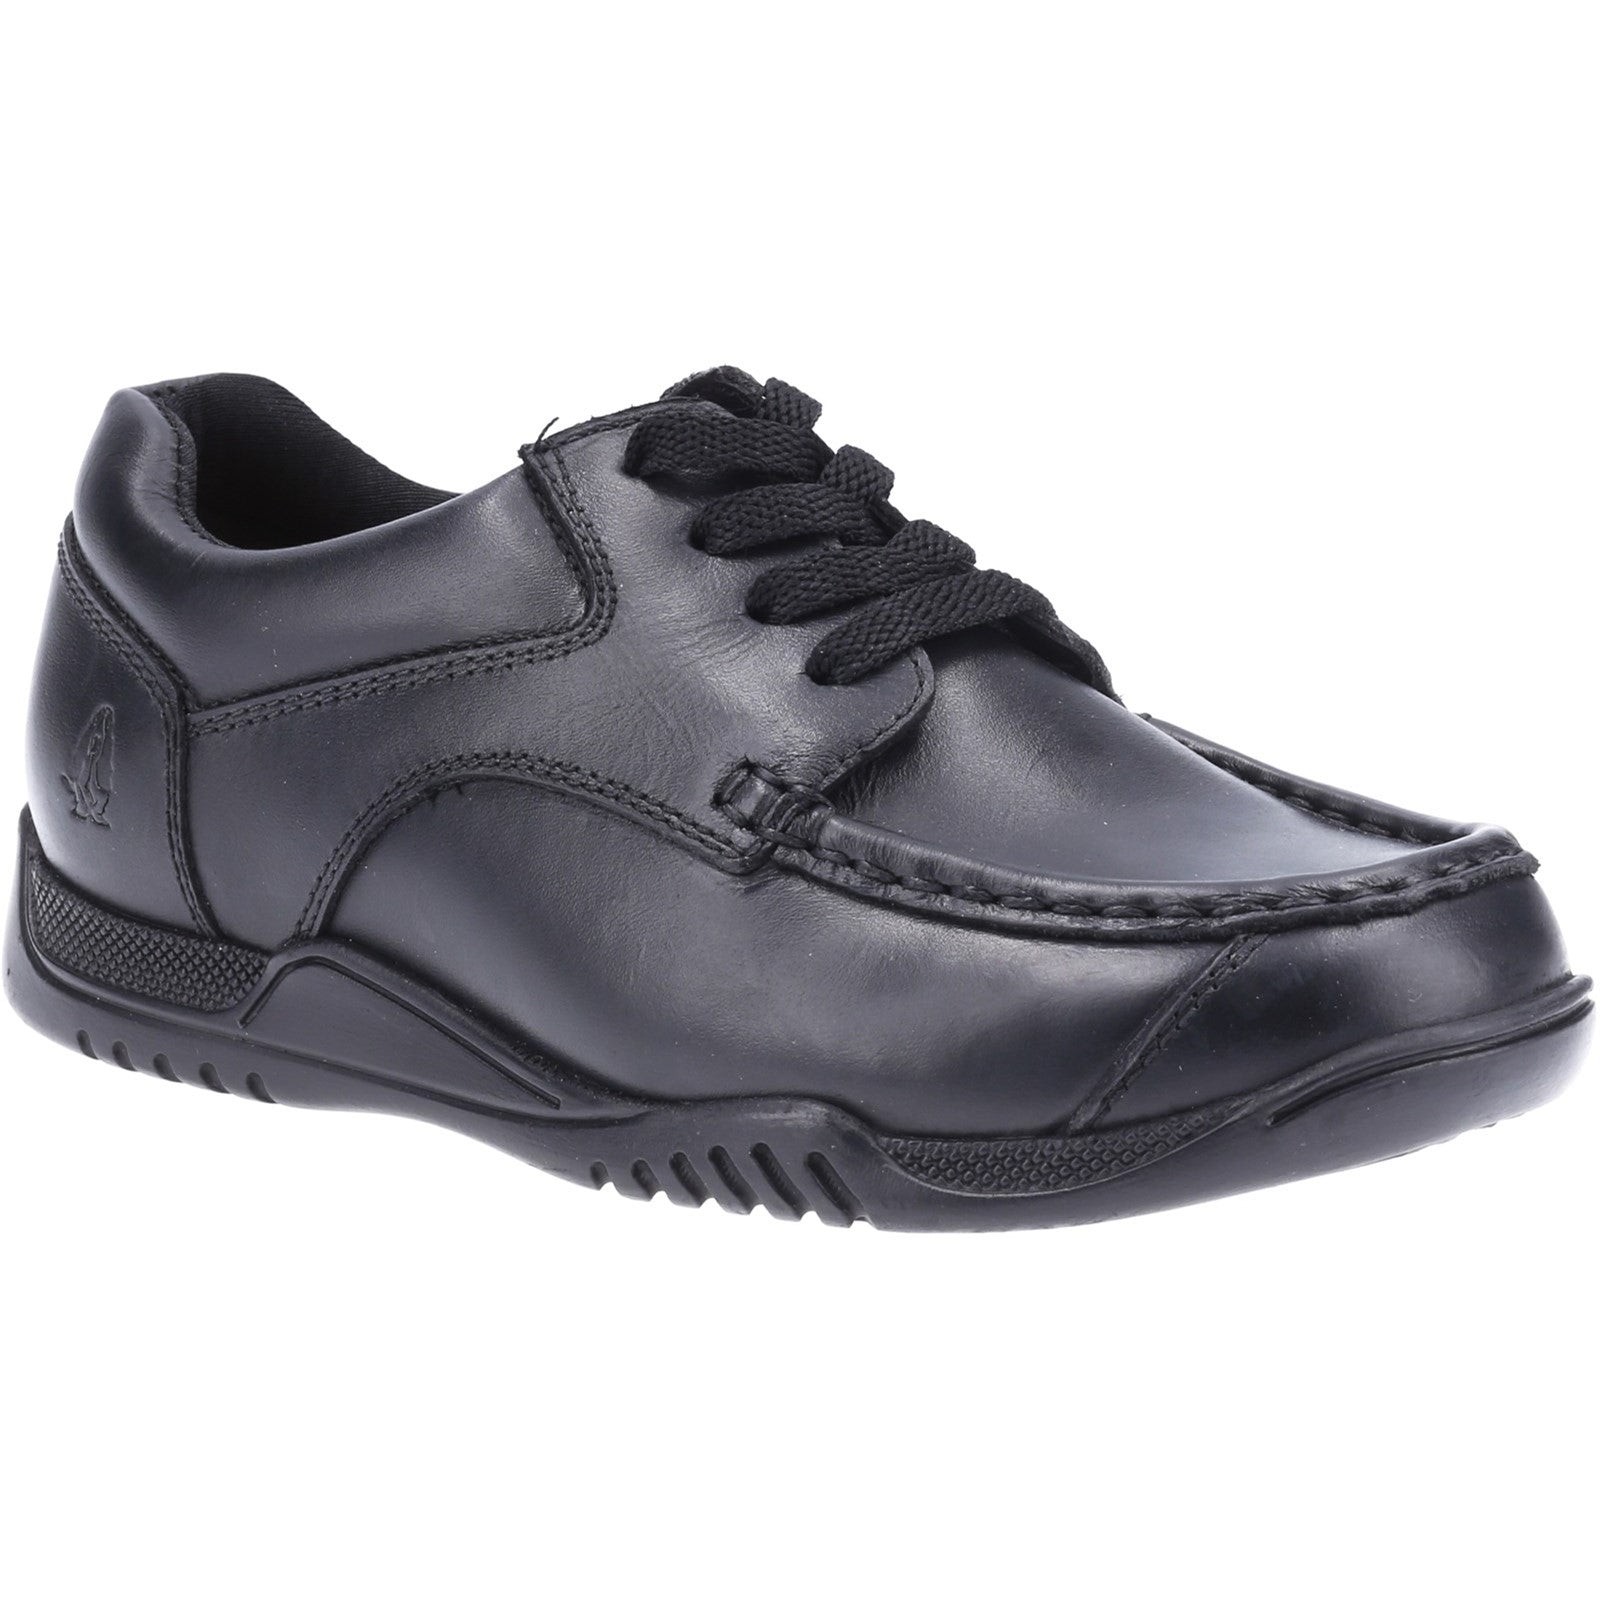 Hush Puppies Boys Hudson Leather School Shoes - Black